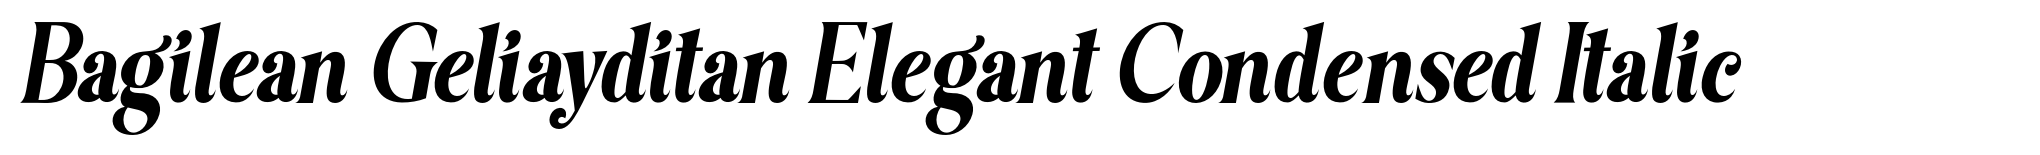 Bagilean Geliayditan Elegant Condensed Italic image